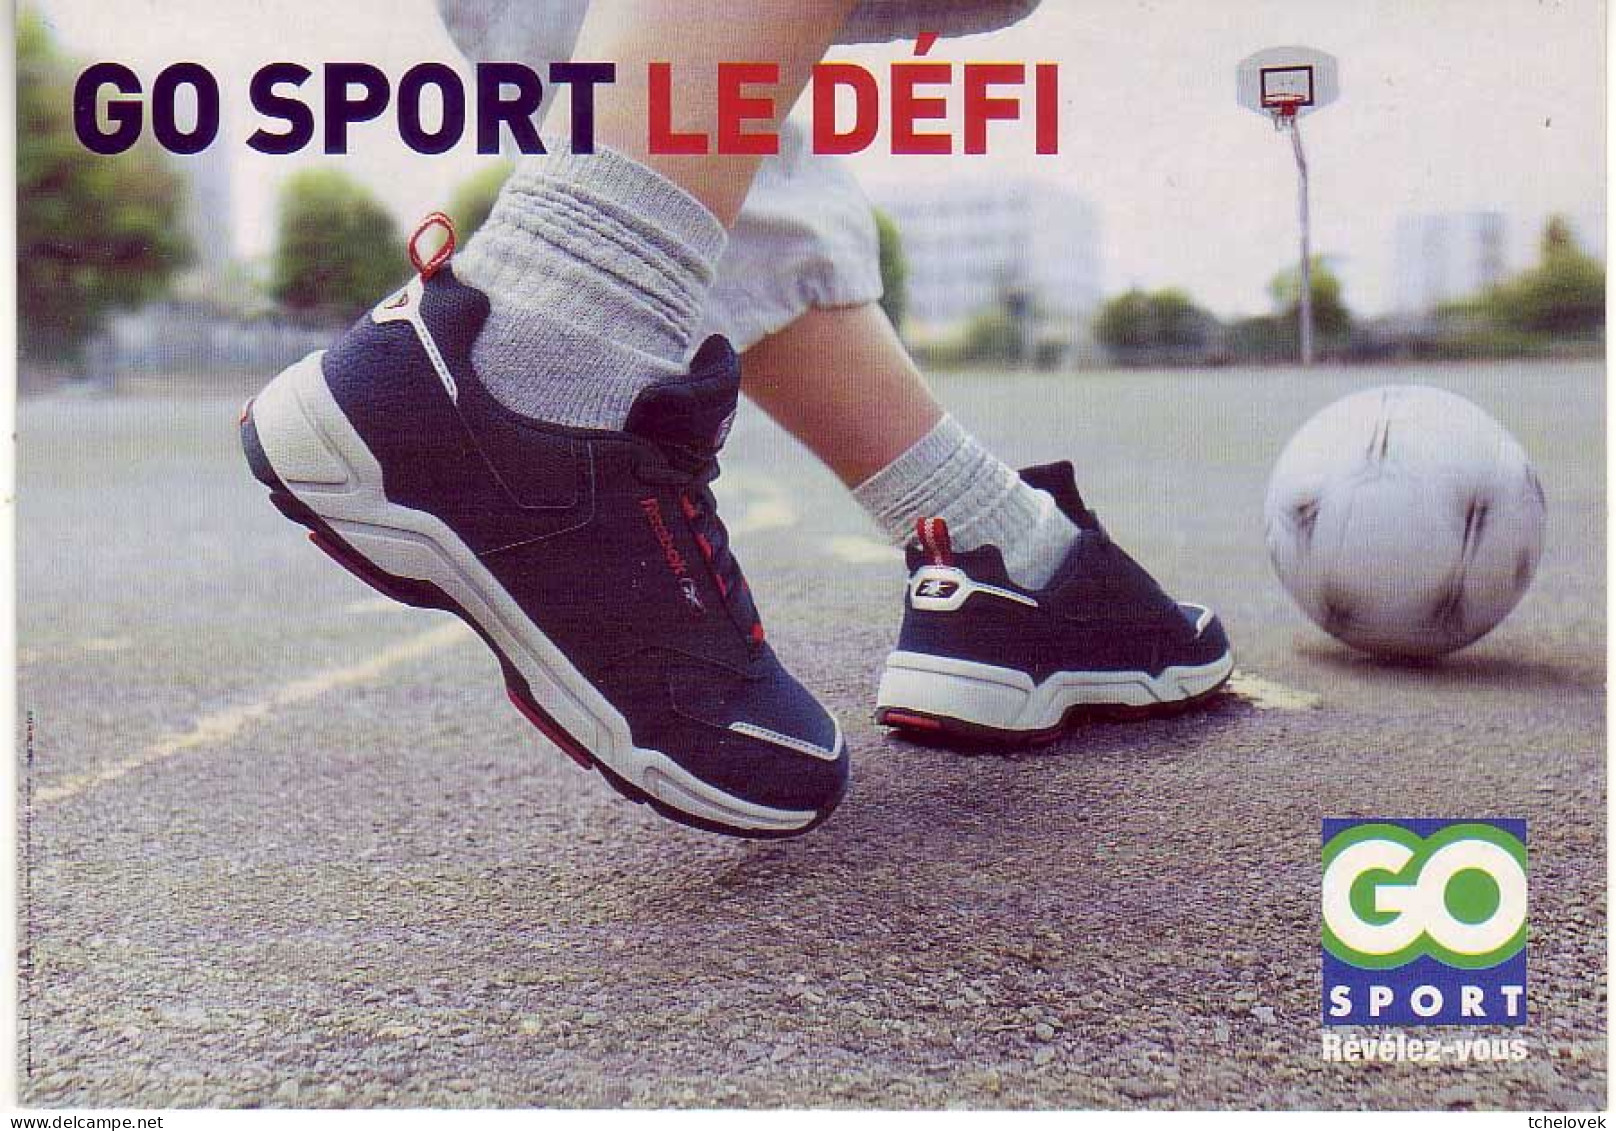 Thèmes. Sports. Basket Ball & Volley Ball. Rouen 2013 & Go Sport Le Defi - Volleybal